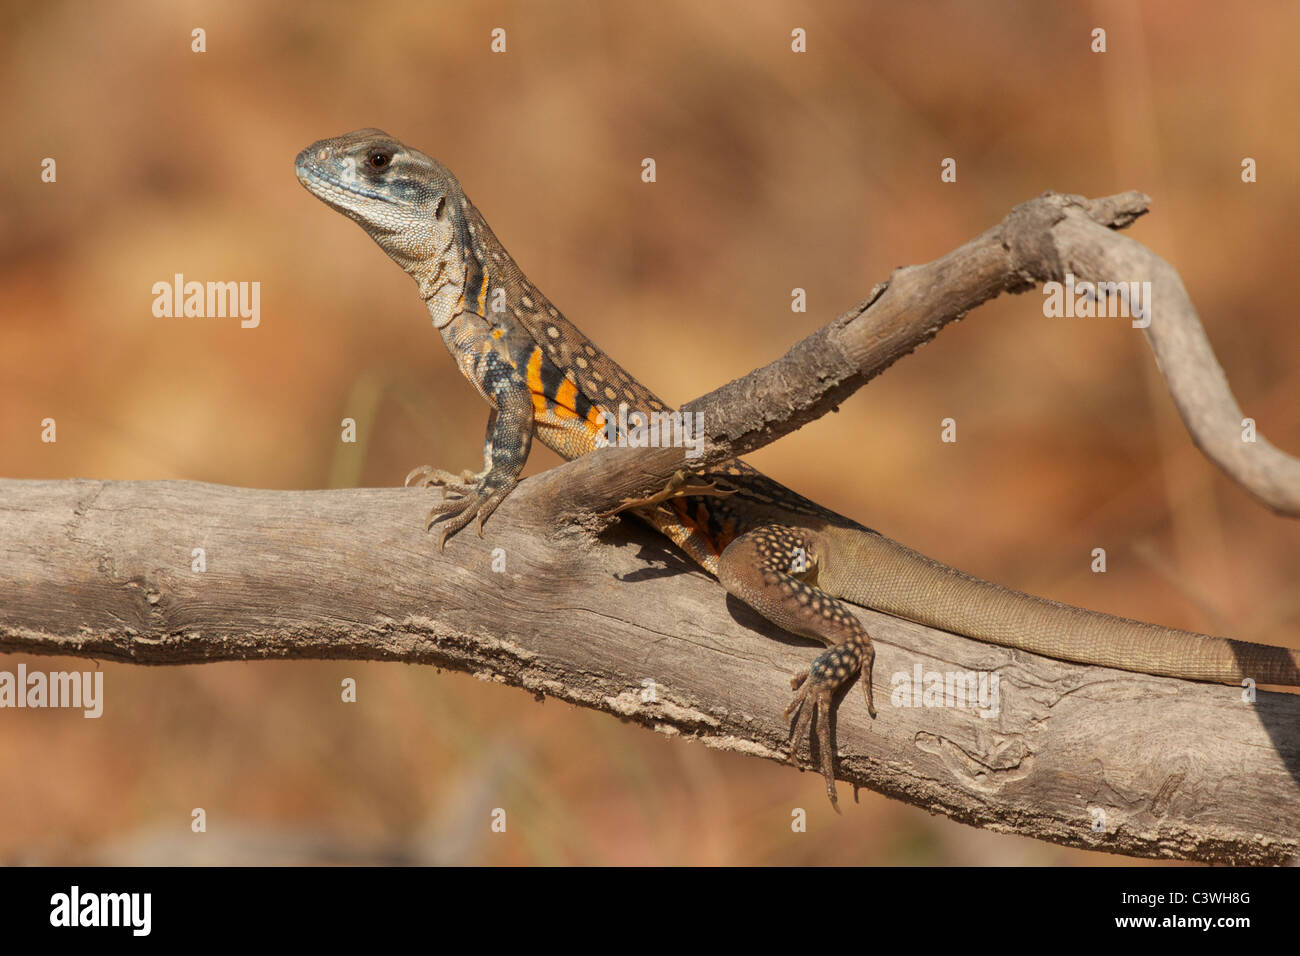 An Eyed Butterfly lizard, leiolepis ocellata, at Huai Kha Kaeng Wildlife Sanctuary in Thailand. Stock Photo